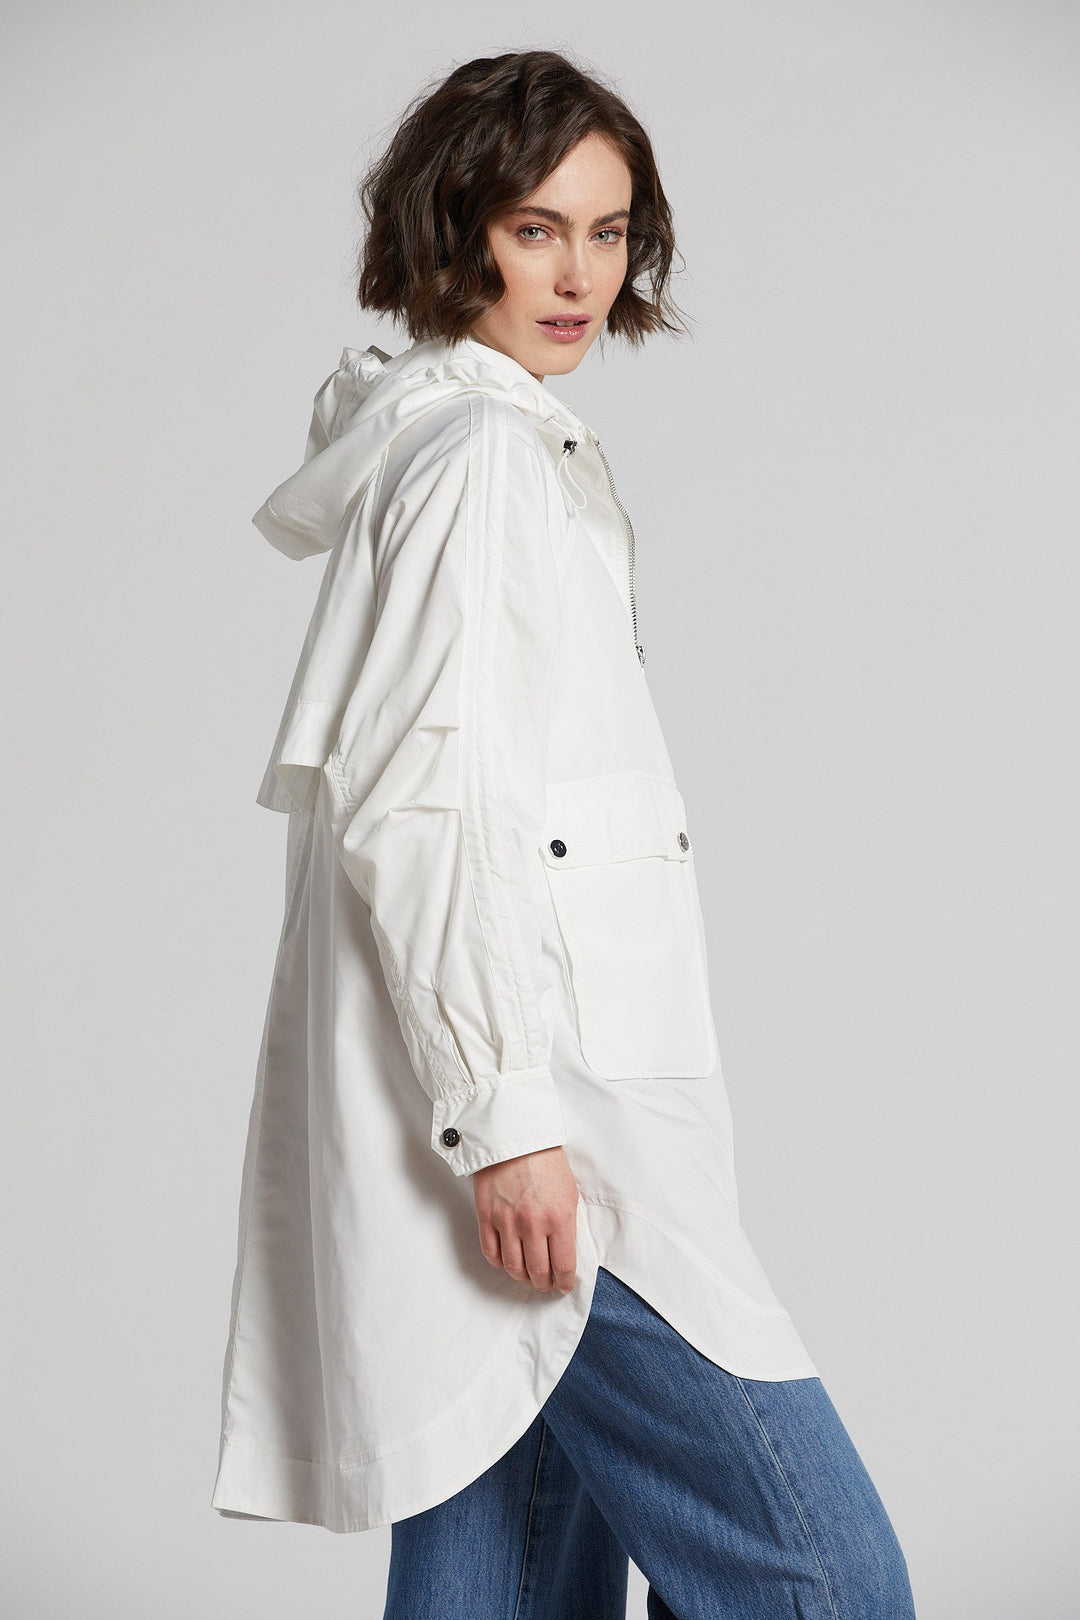 Adroit Atelier Nikita Lightweight Hooded Raincoat in White